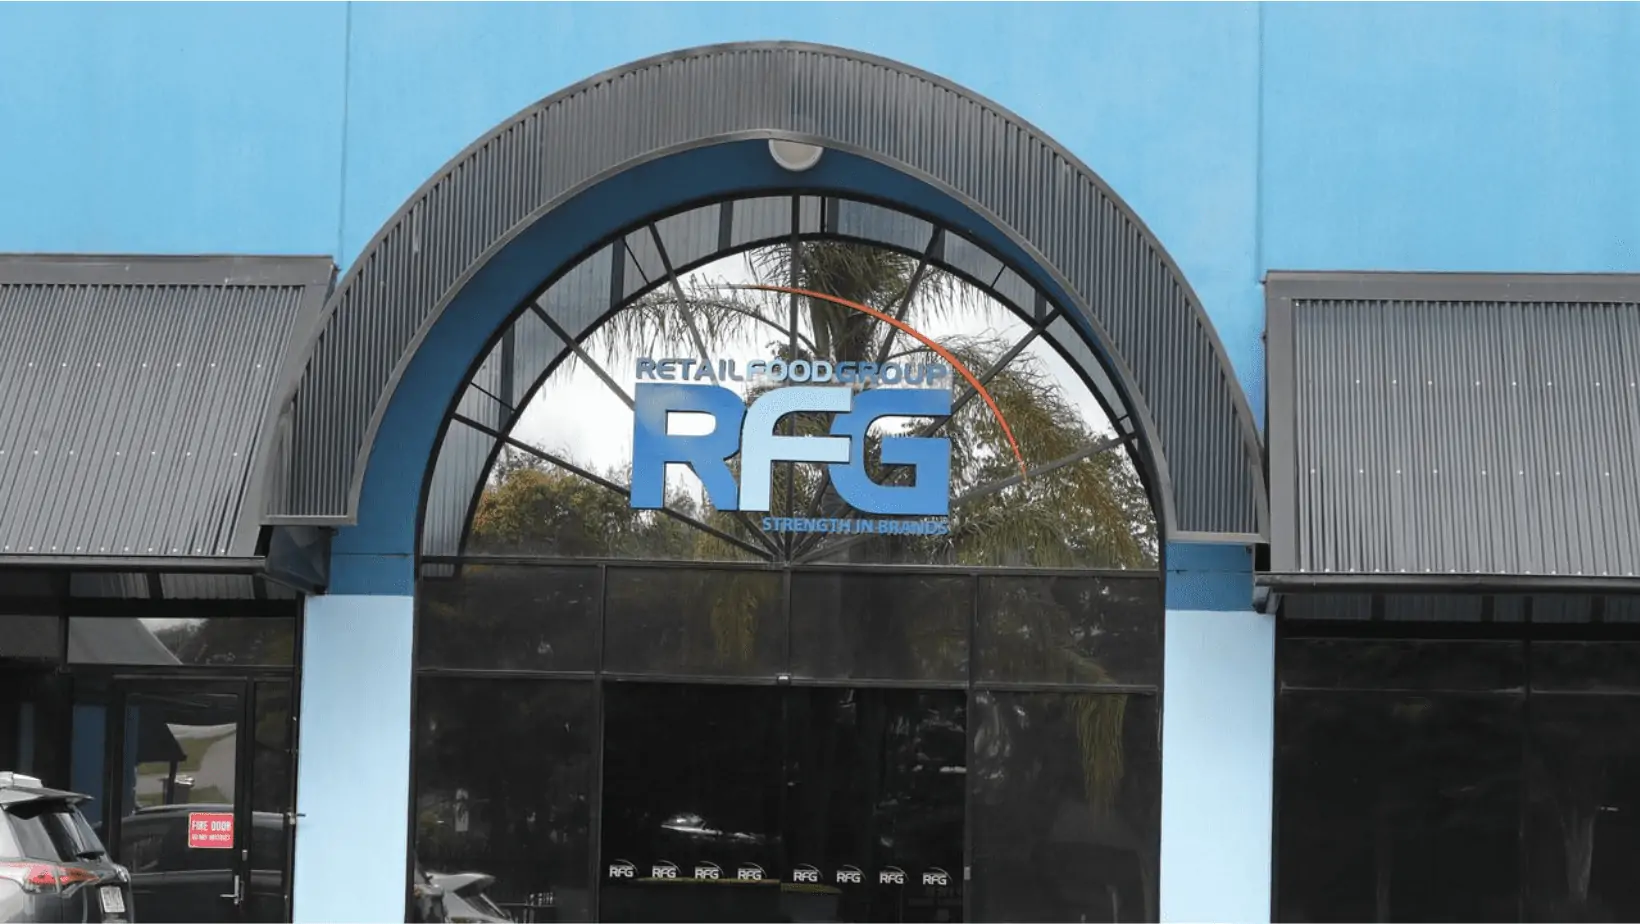 RFG Group